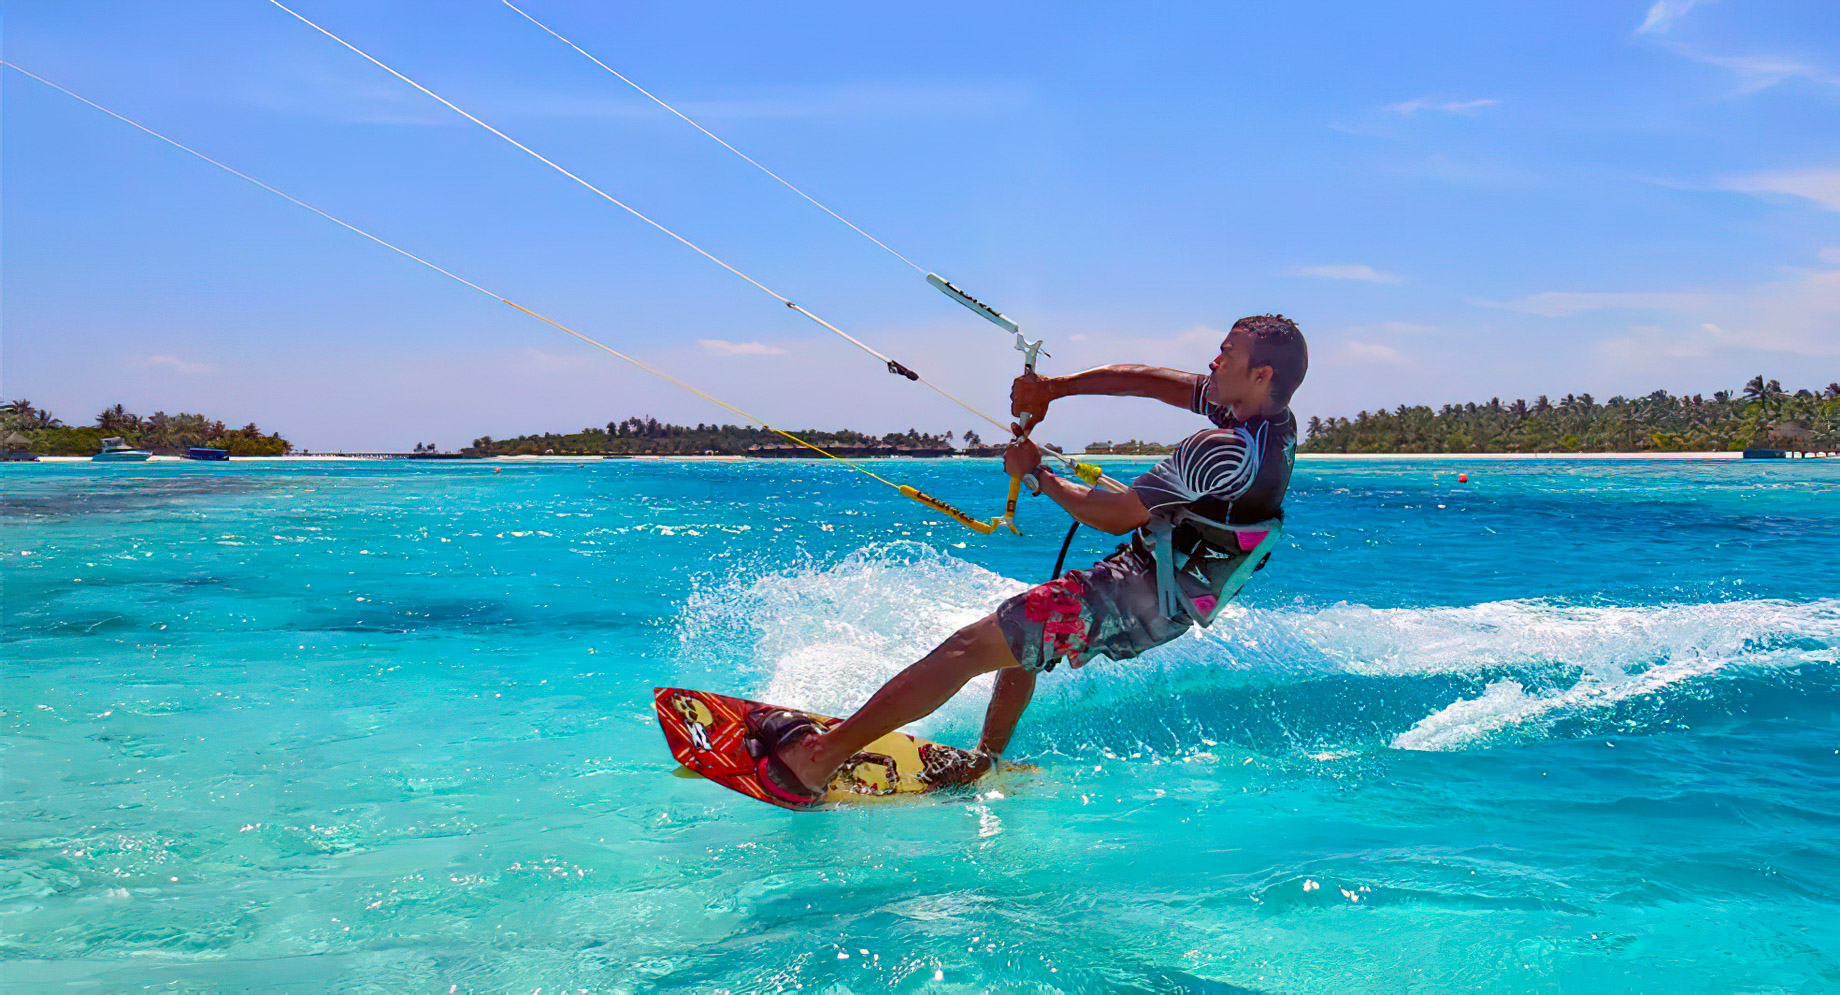 Anantara Thigu Maldives Resort - South Male Atoll, Maldives - Watersports Kitesurfing